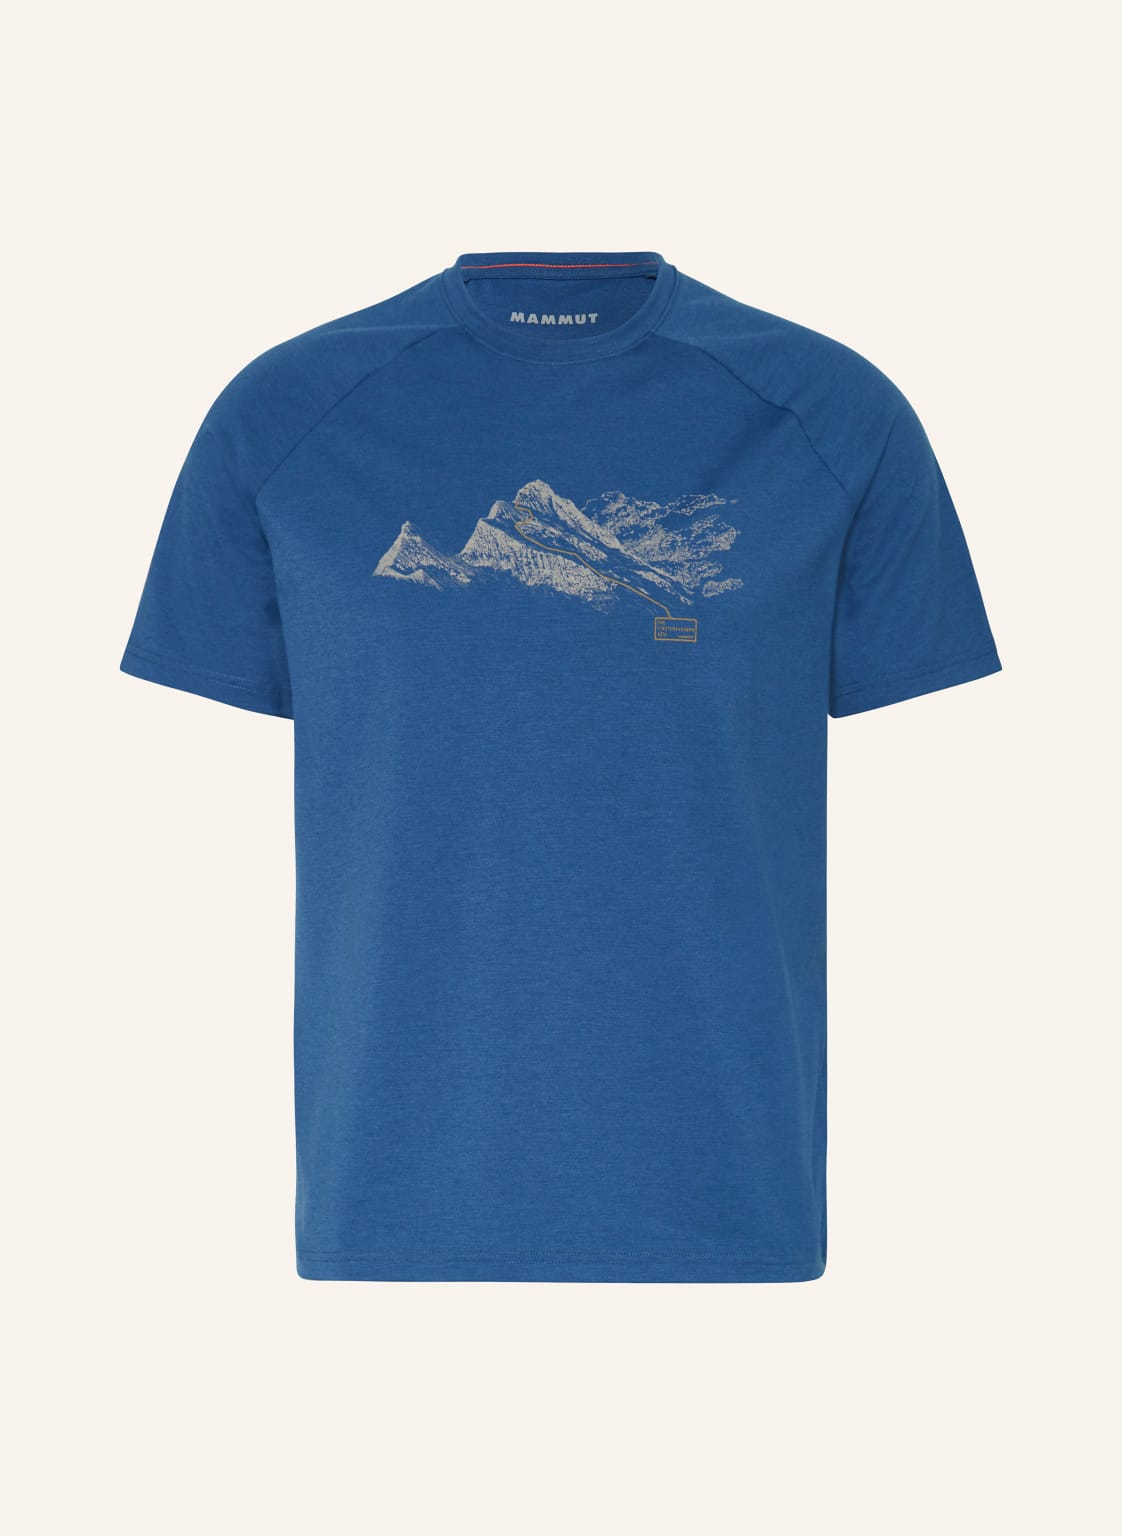 Mammut T-Shirt Mountain blau von mammut